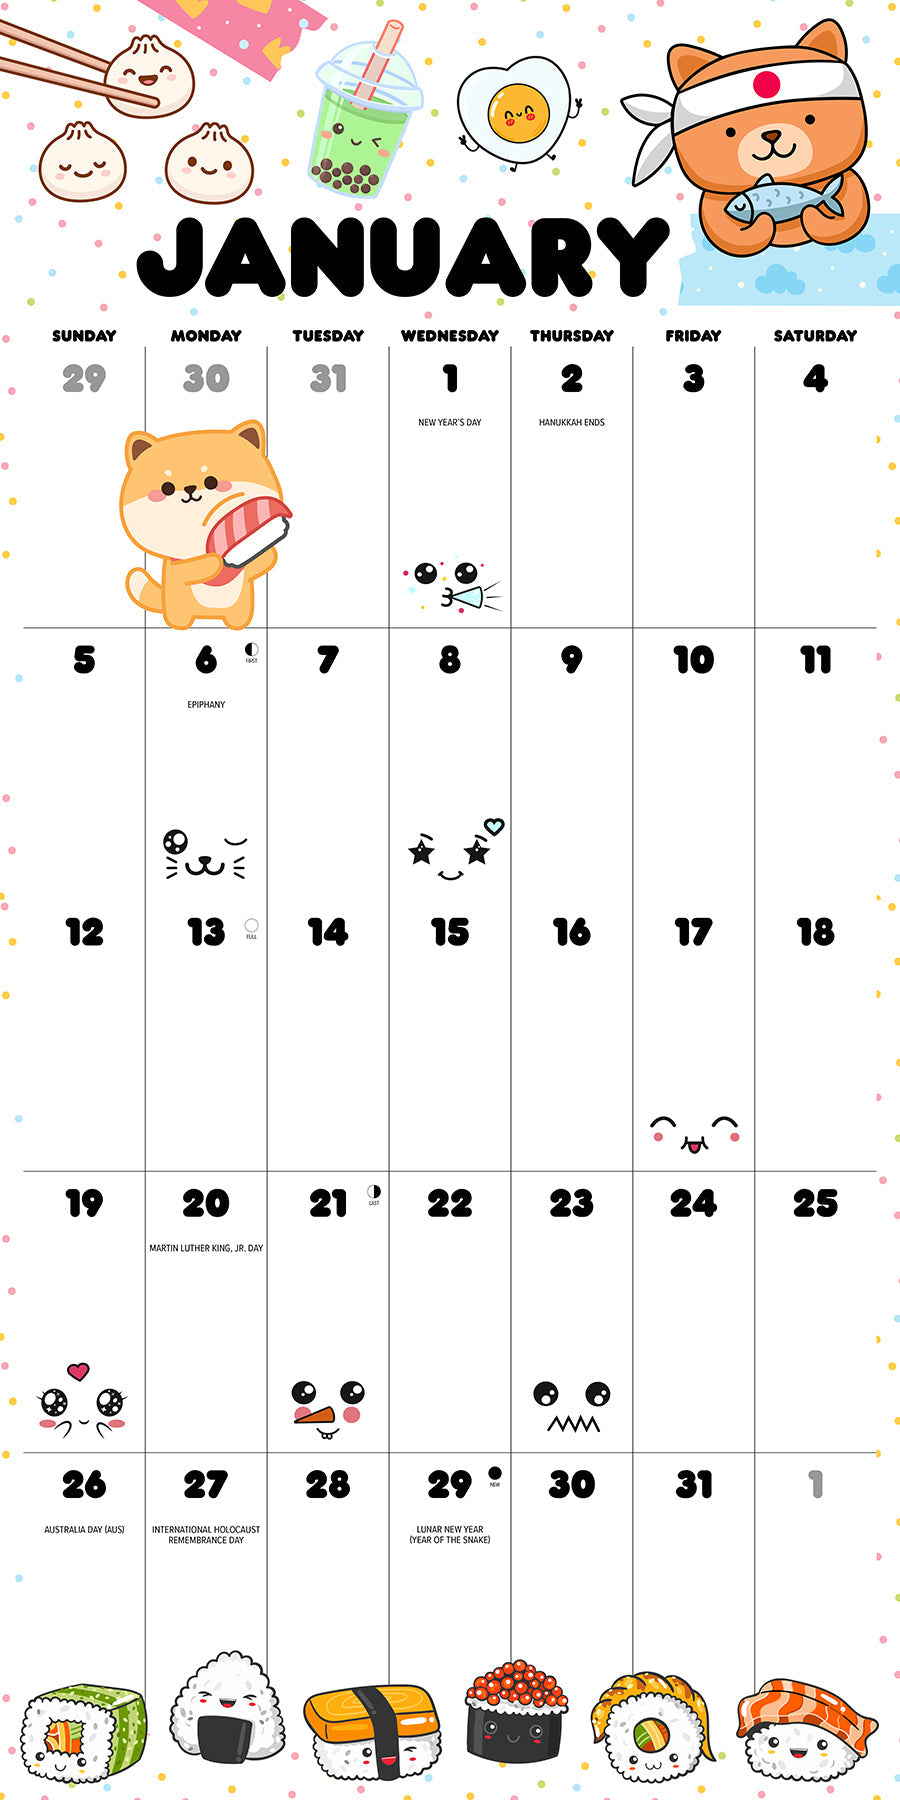 2025 Kawaii - Square Wall Calendar